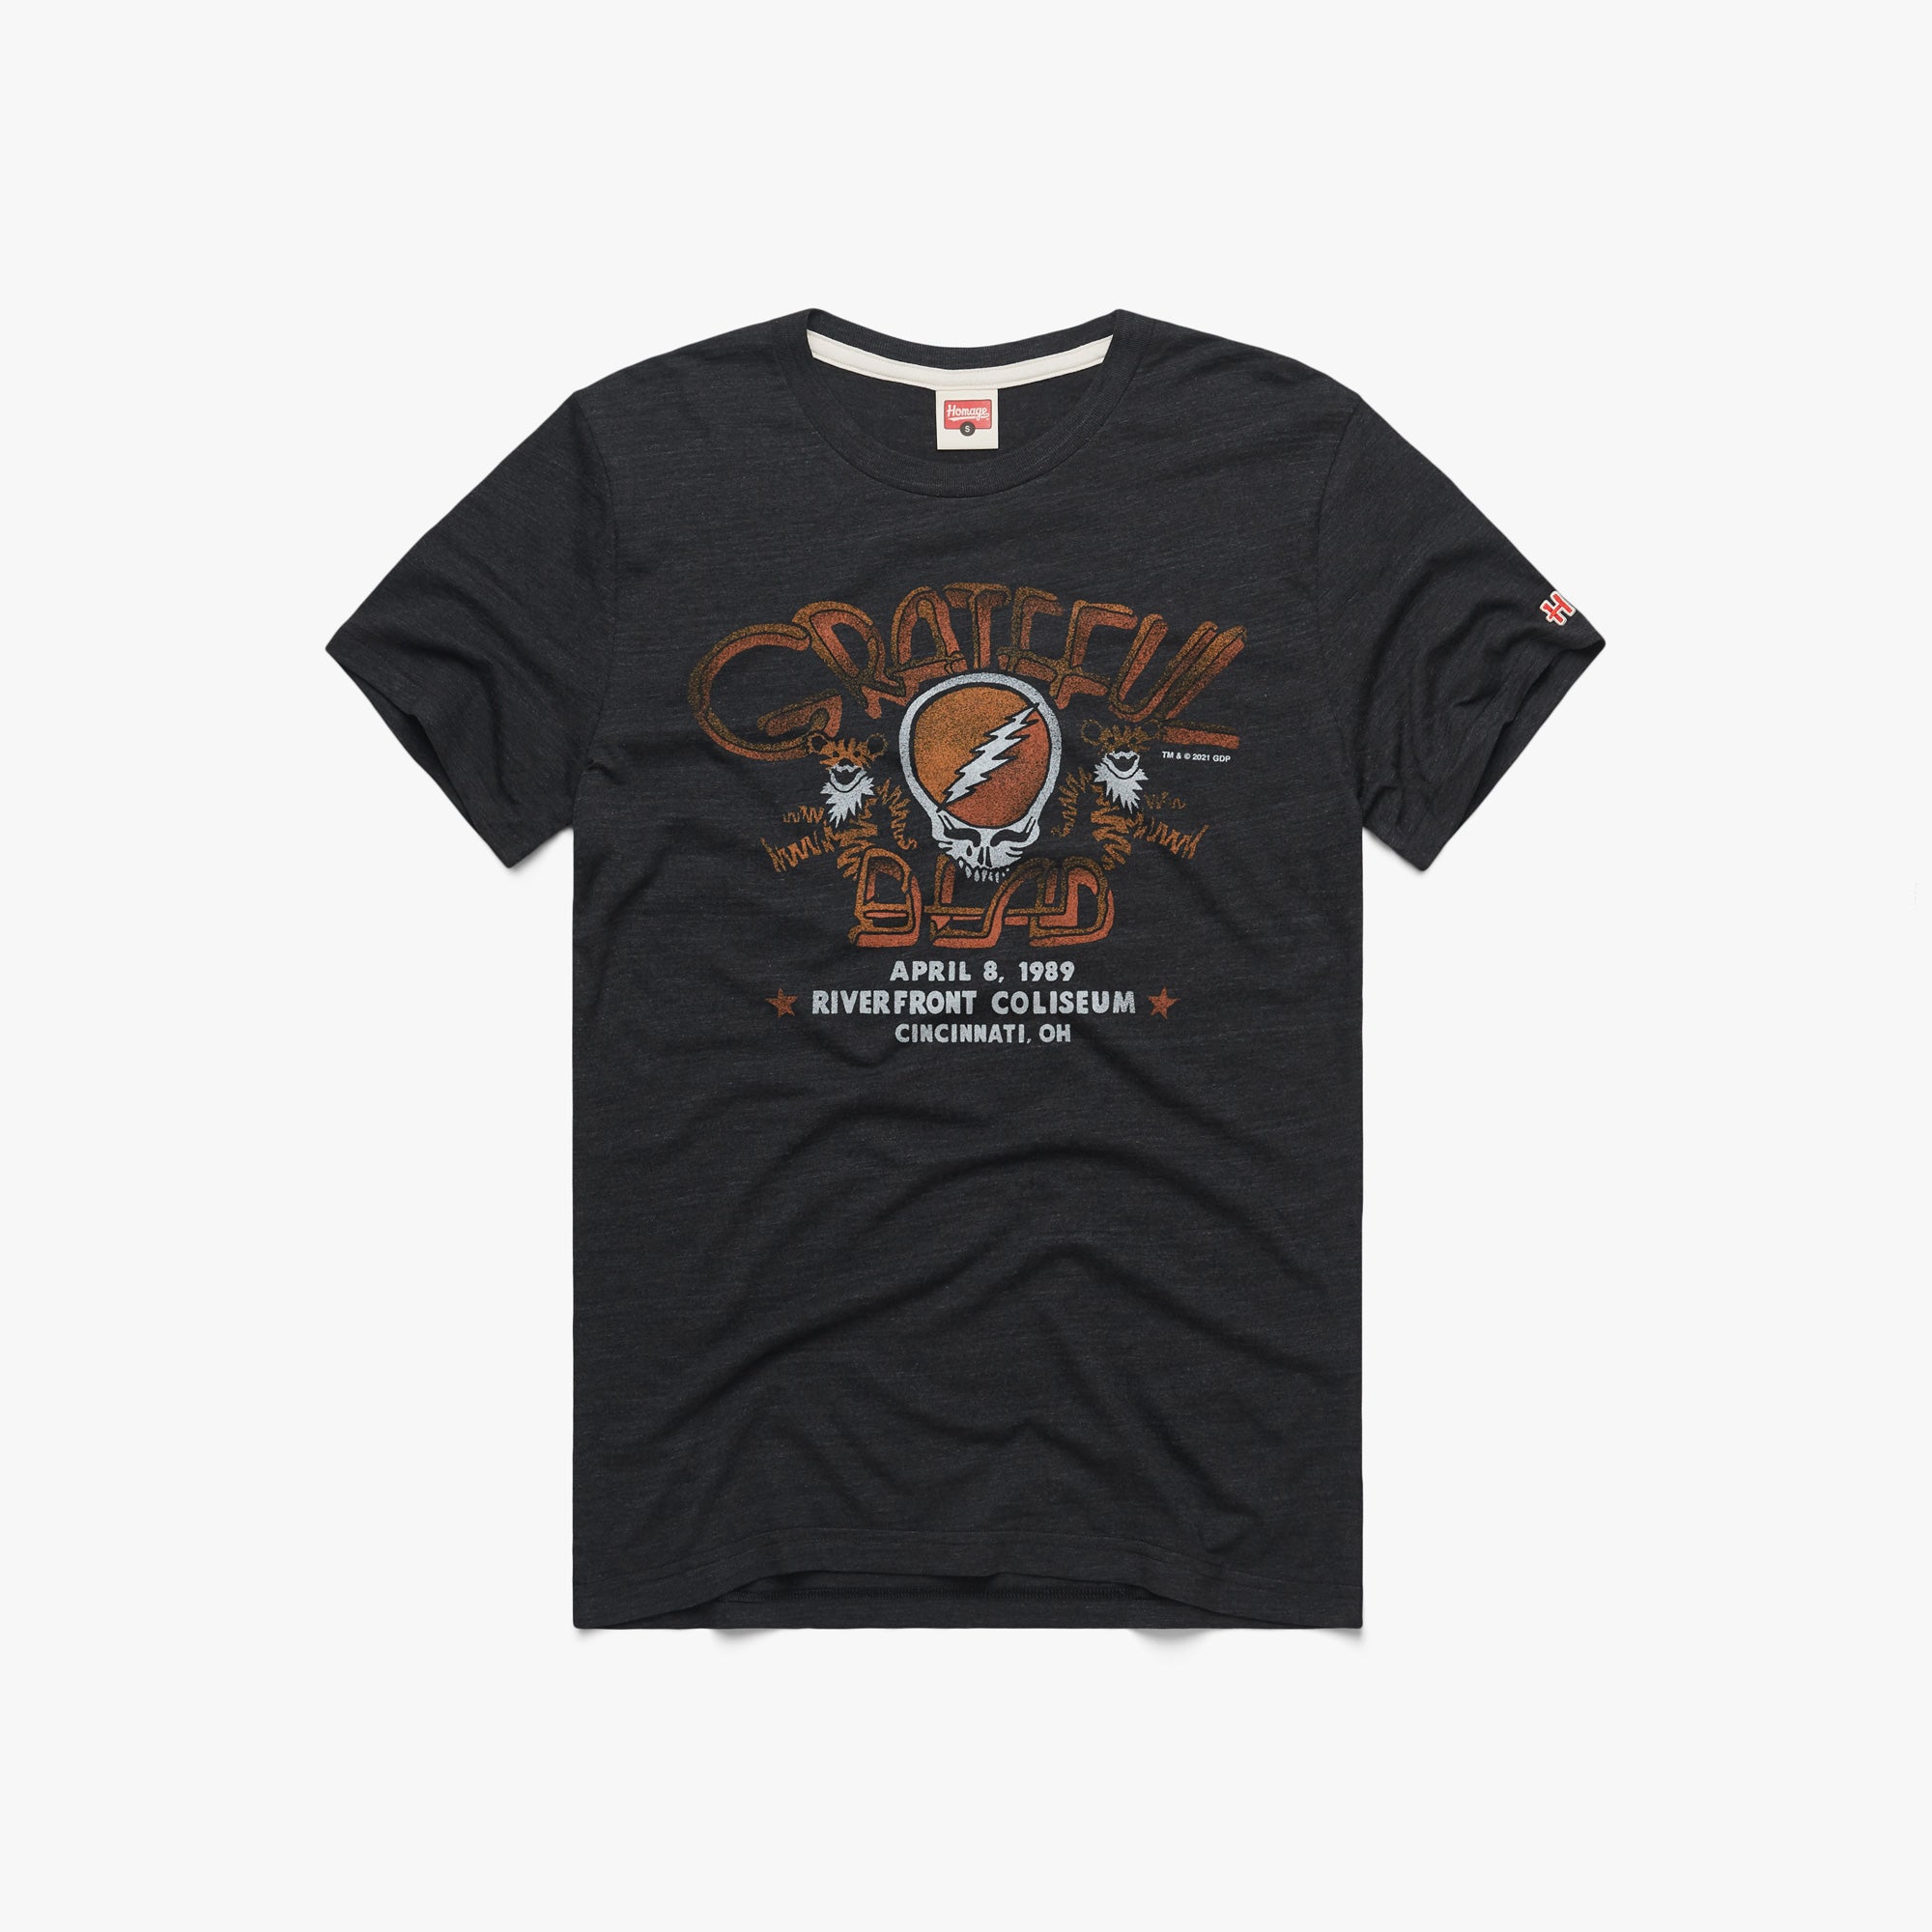 COOLDESIGNITEM Grateful Dead Riverfront Coliseum T-Shirt